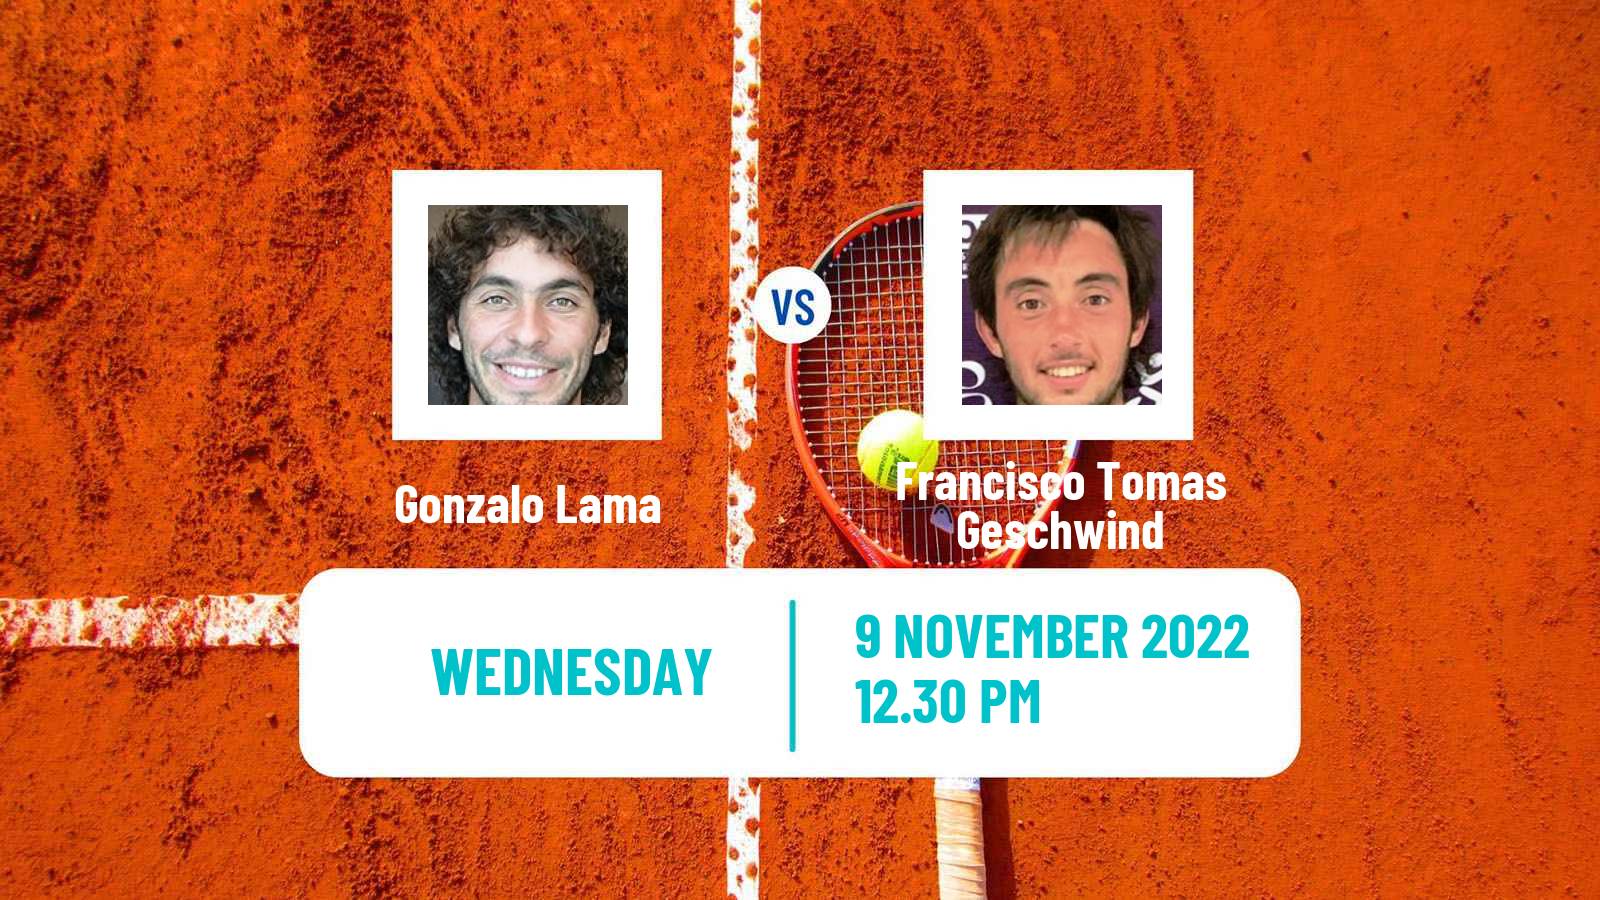 Tennis ITF Tournaments Gonzalo Lama - Francisco Tomas Geschwind